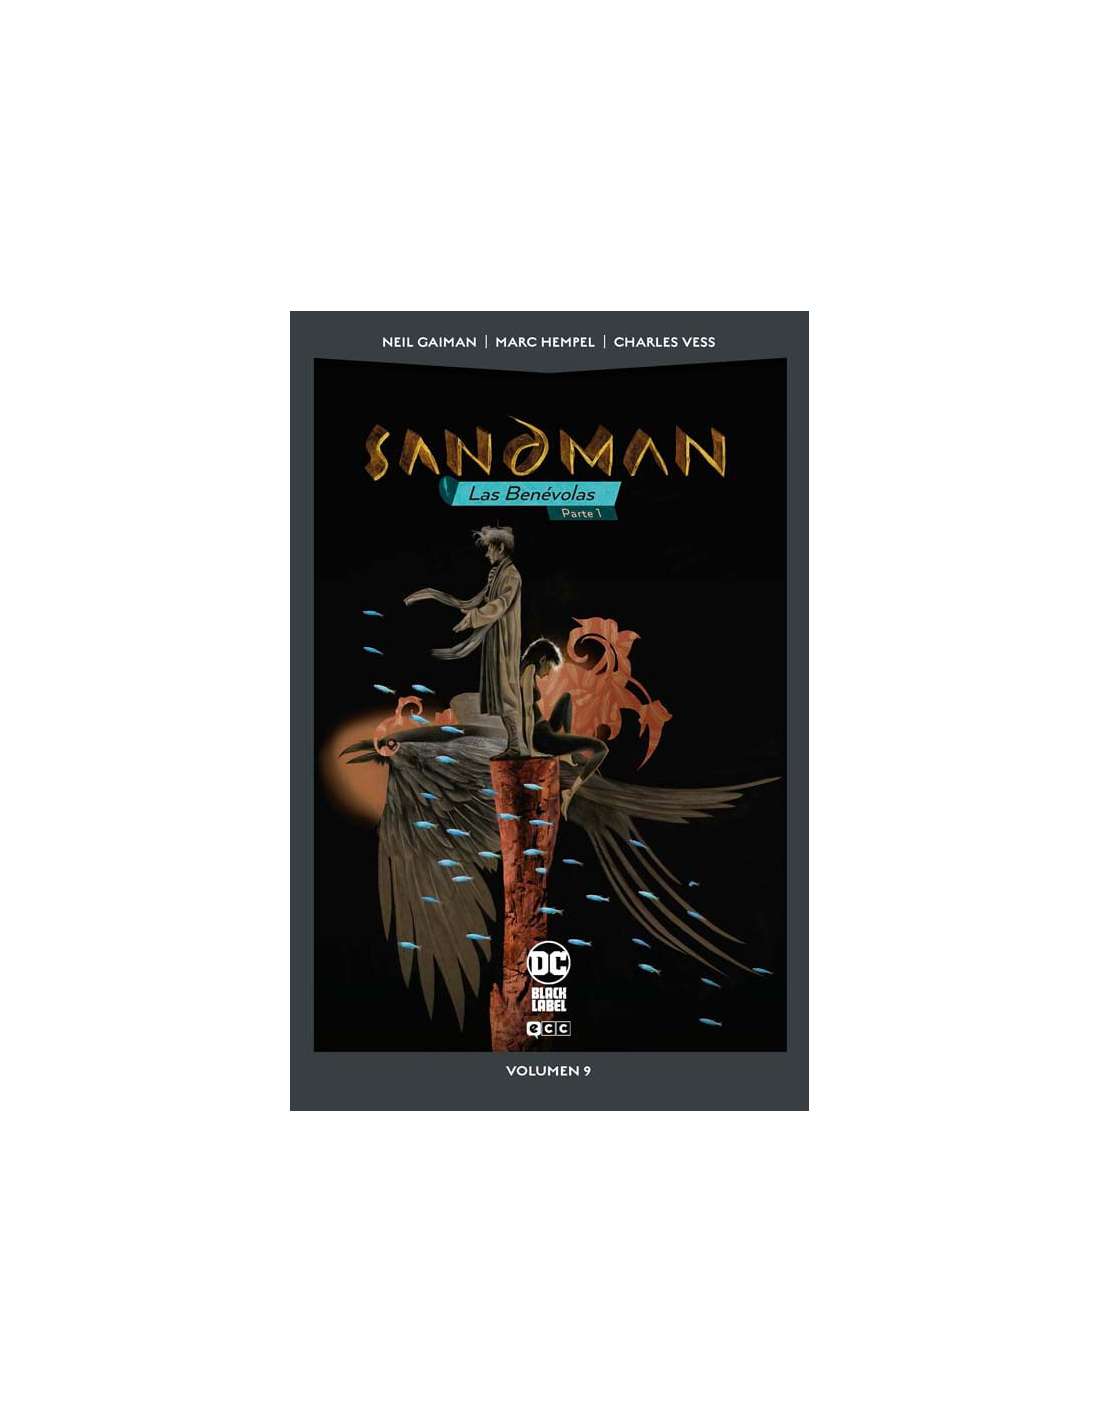 Neil Gaiman, Kevin Nowlan, Charles Vess, Marc Hempel: Sandman vol. 09: Las Benévolas - Parte 1 (ecc)